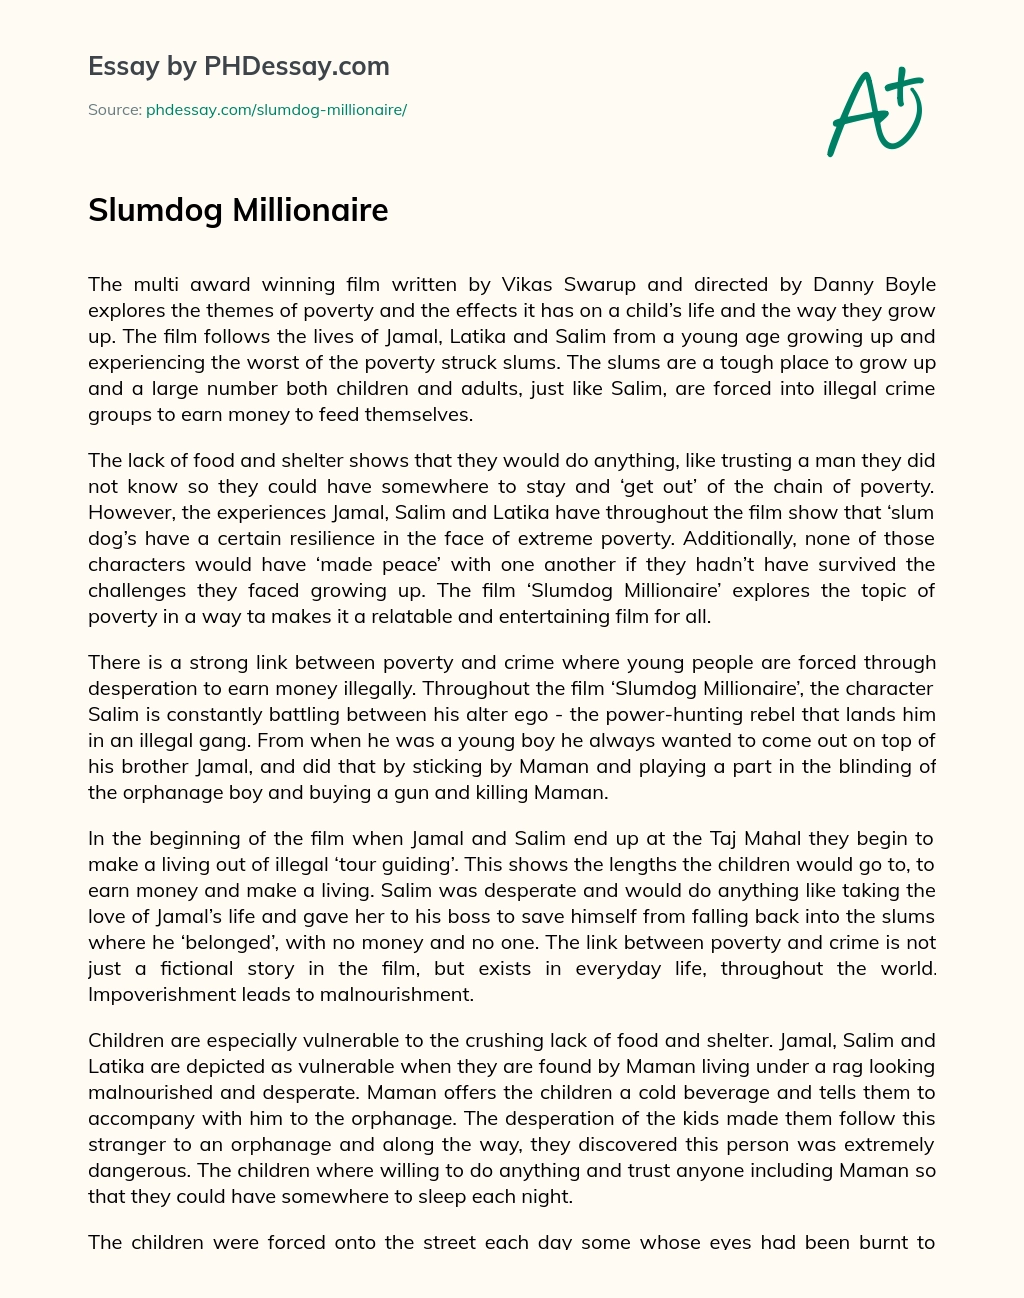 Slumdog Millionaire essay